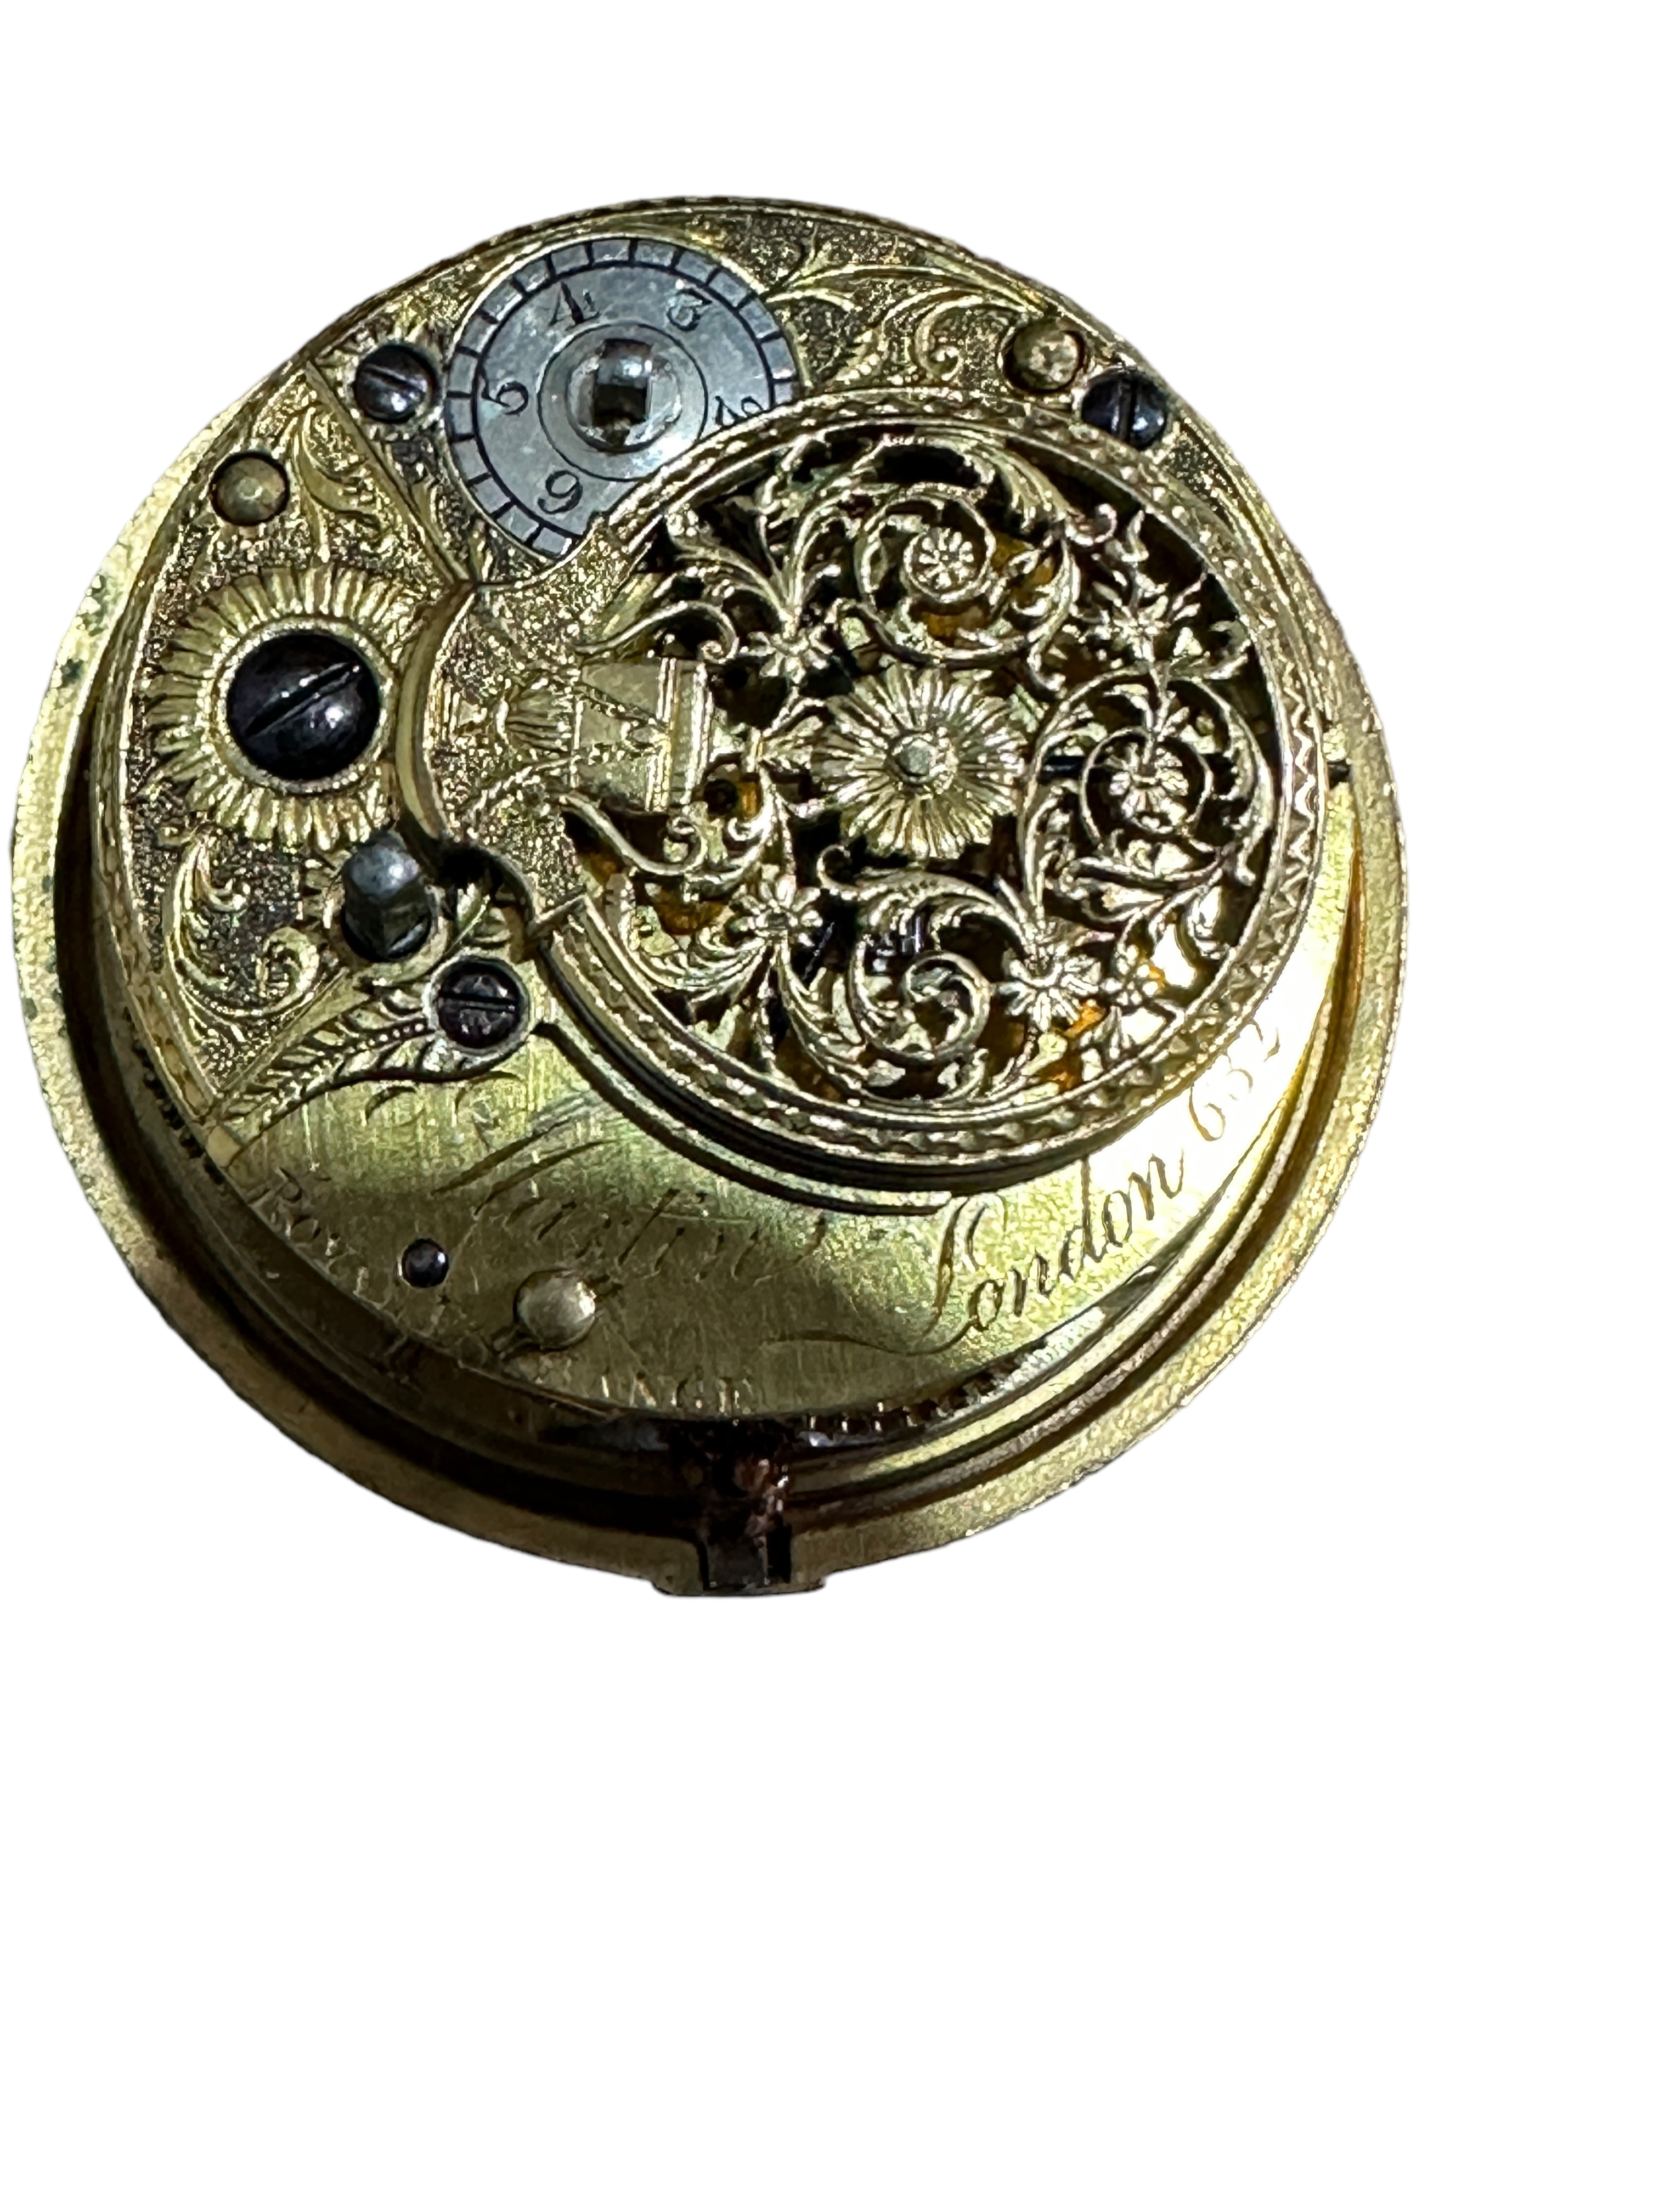 Antique Martin Royal Exchange London Verge Pocket Watch - Gold Case? - working order. - Image 9 of 16